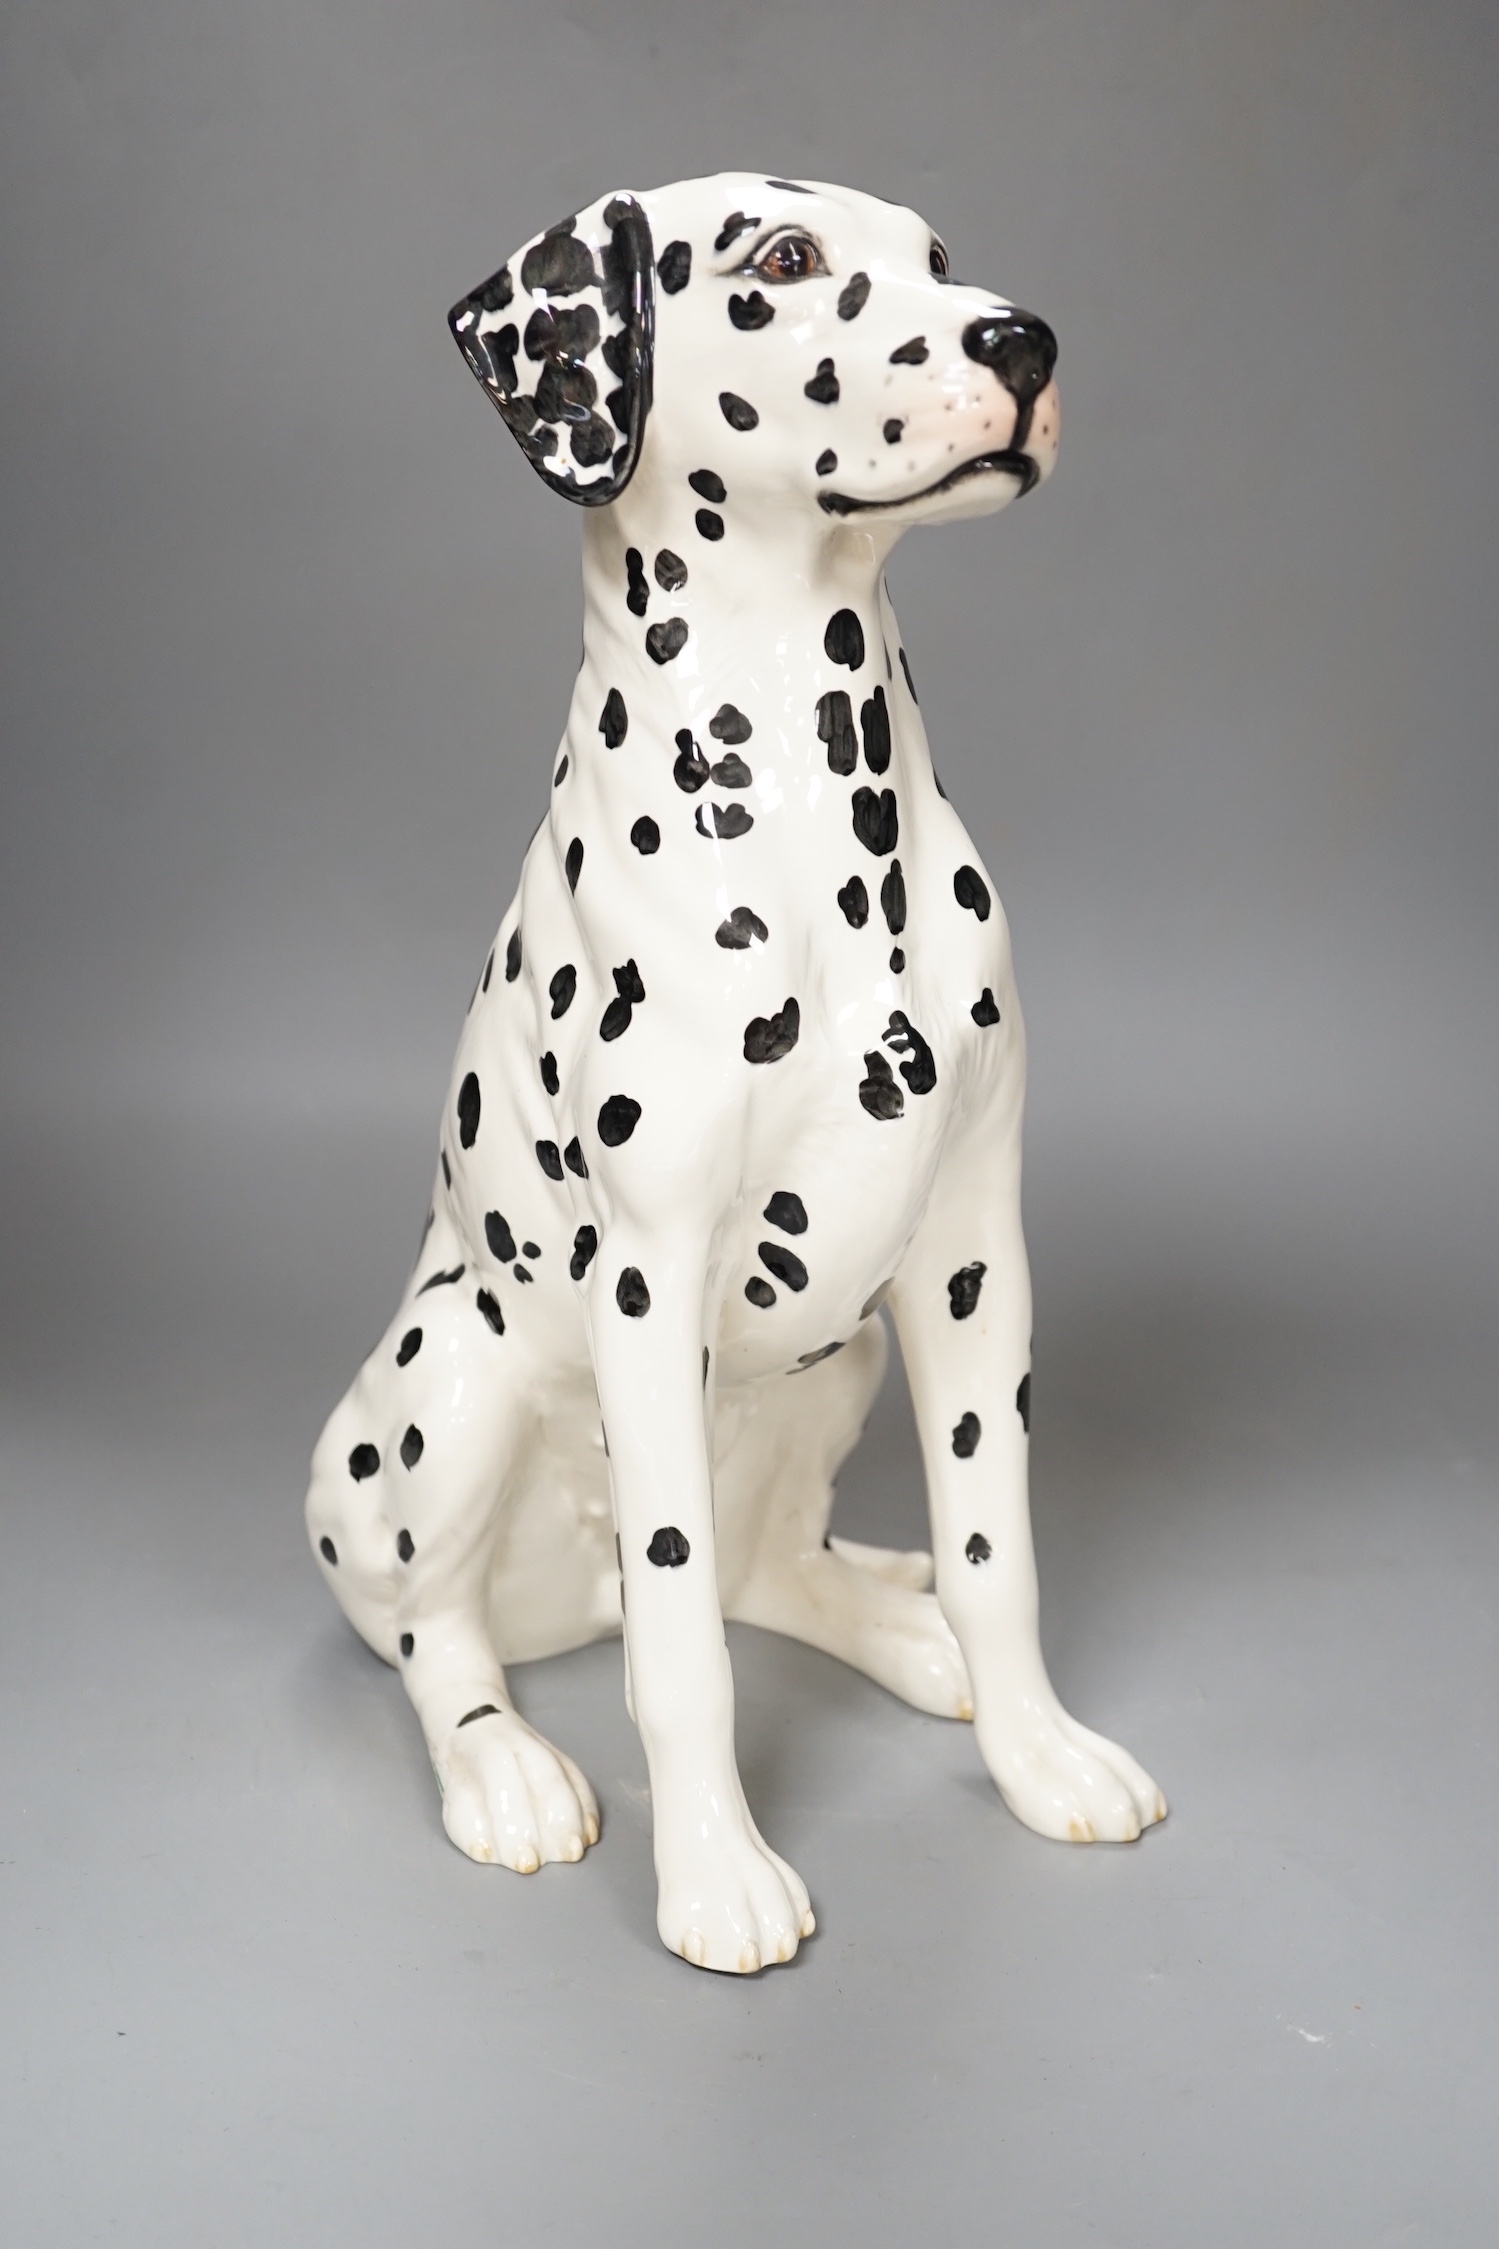 A large Beswick figure of a Dalmatian - 35cm high